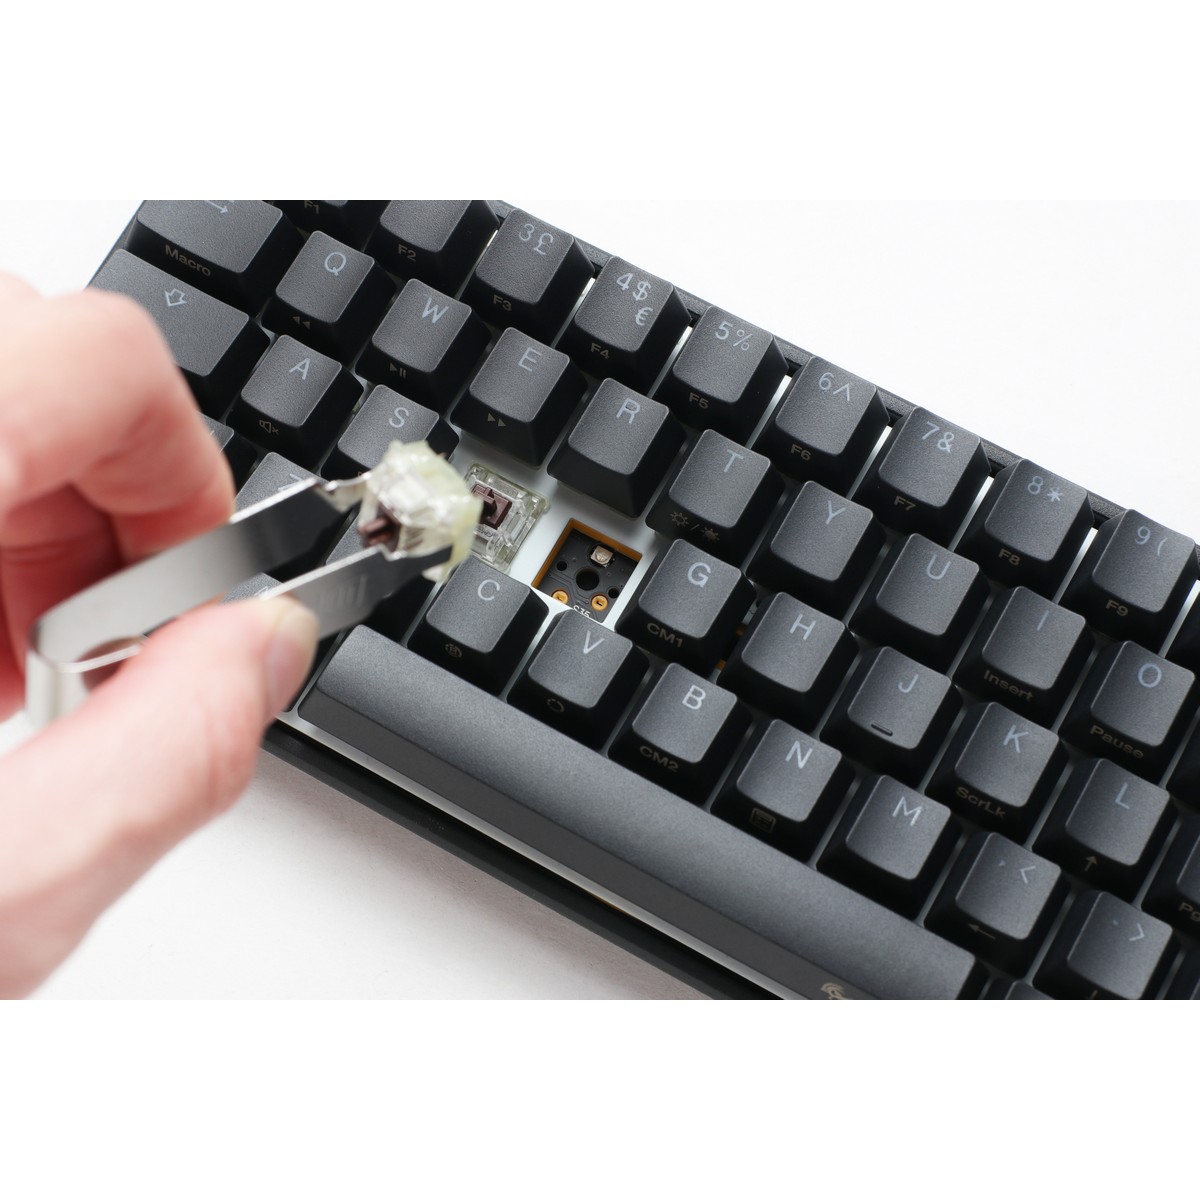 Ducky - Ducky Mecha Pro SF 65% USB RGB Mechanical Gaming Keyboard Cherry MX Blue - UK La